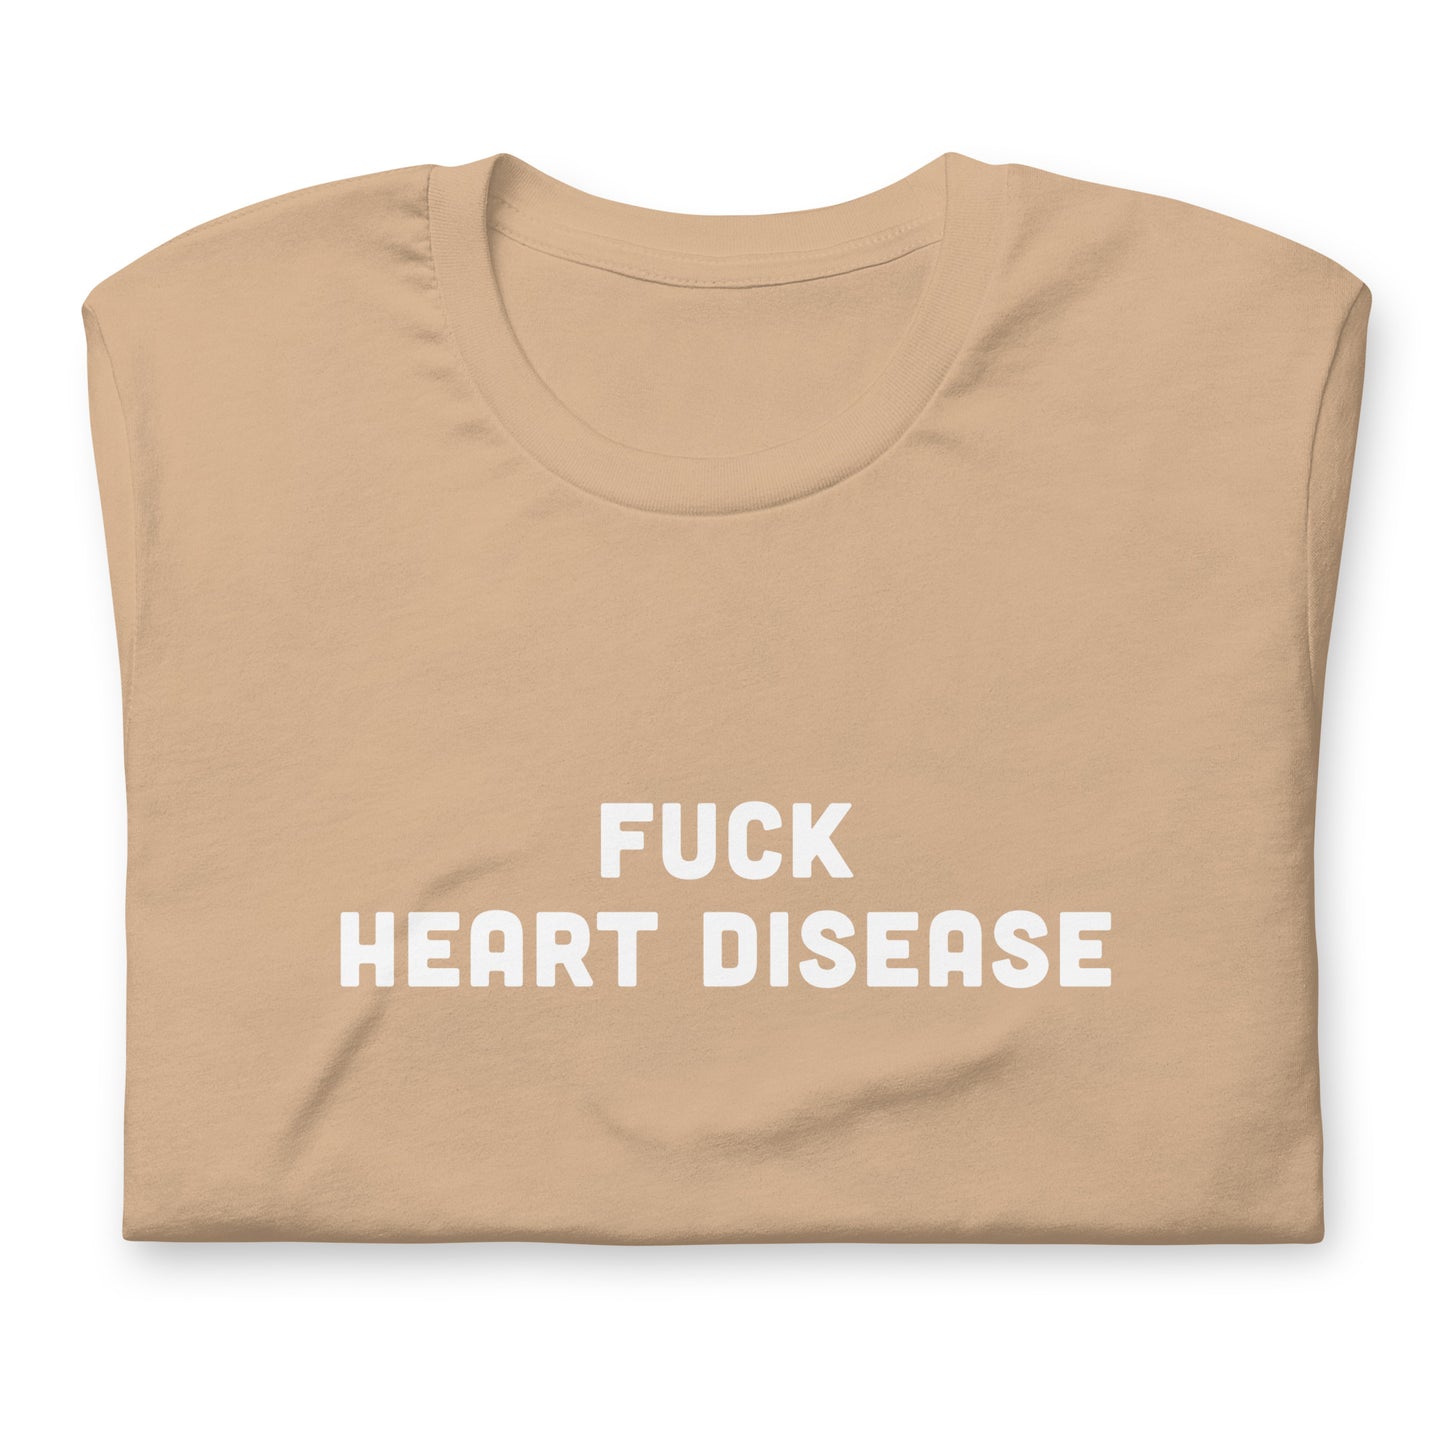 Fuck Heart Disease T-Shirt Size XL Color Forest